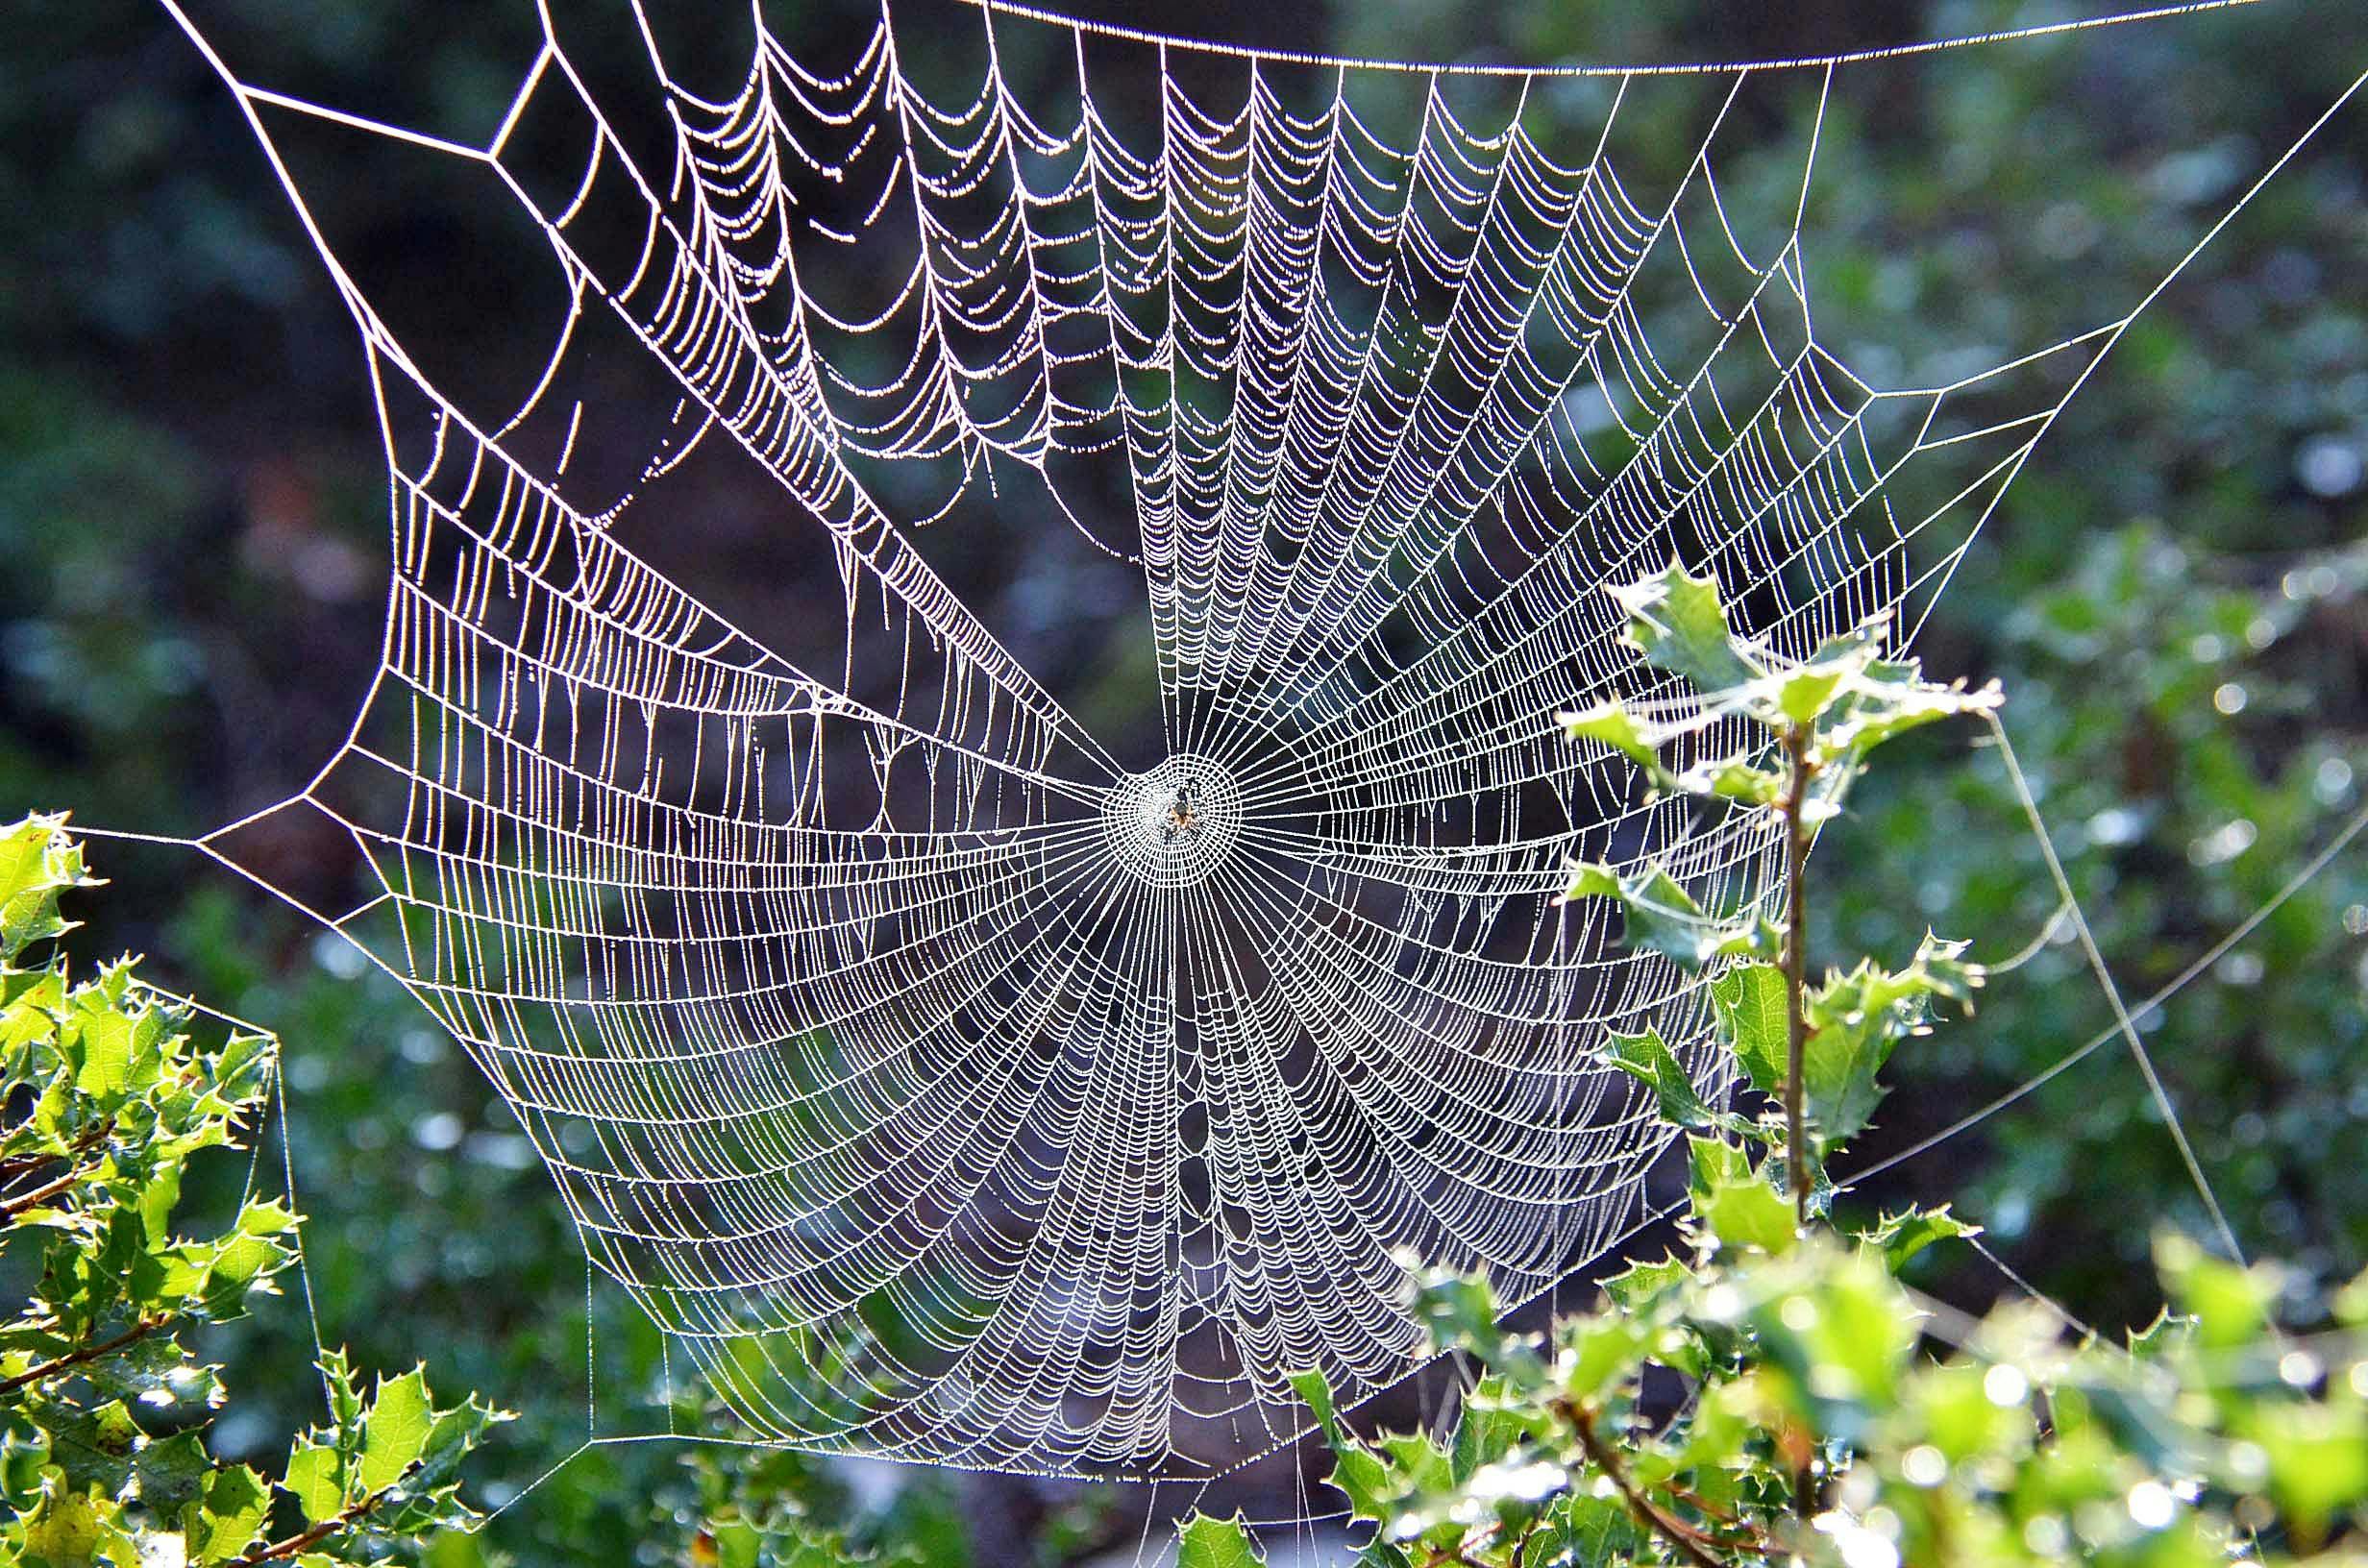 1000+ Spider Web Pictures  Download Free Images on Unsplash